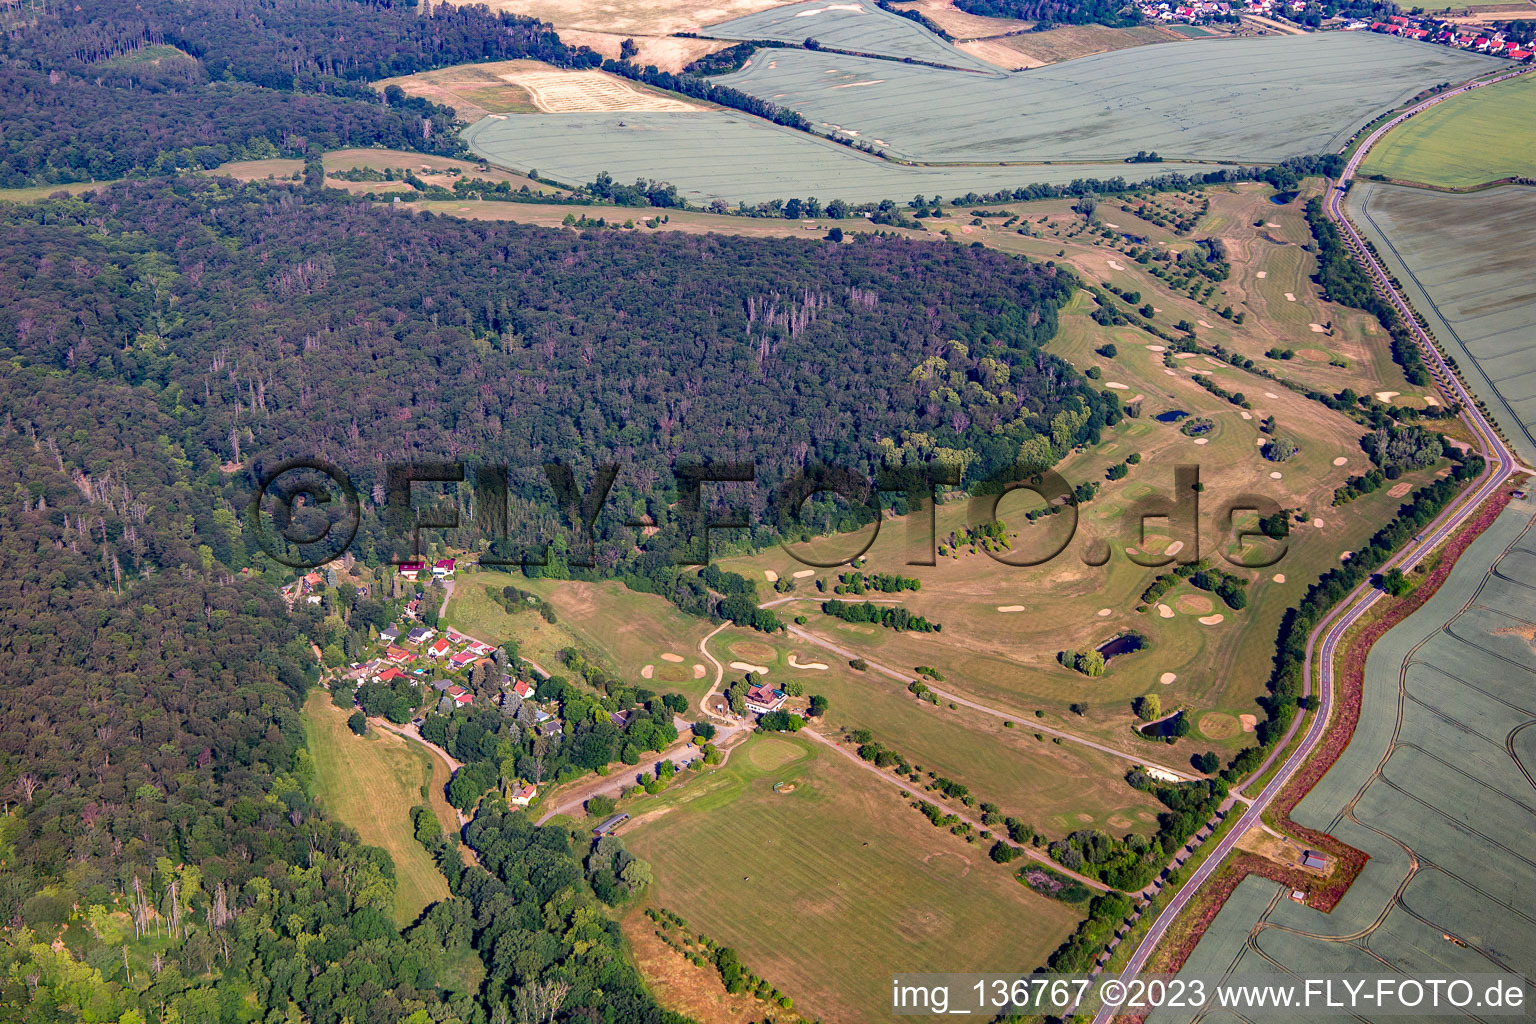 Aerial photograpy of Golf Club Schloß Meisdorf eV in the district Meisdorf in Falkenstein in the state Saxony-Anhalt, Germany